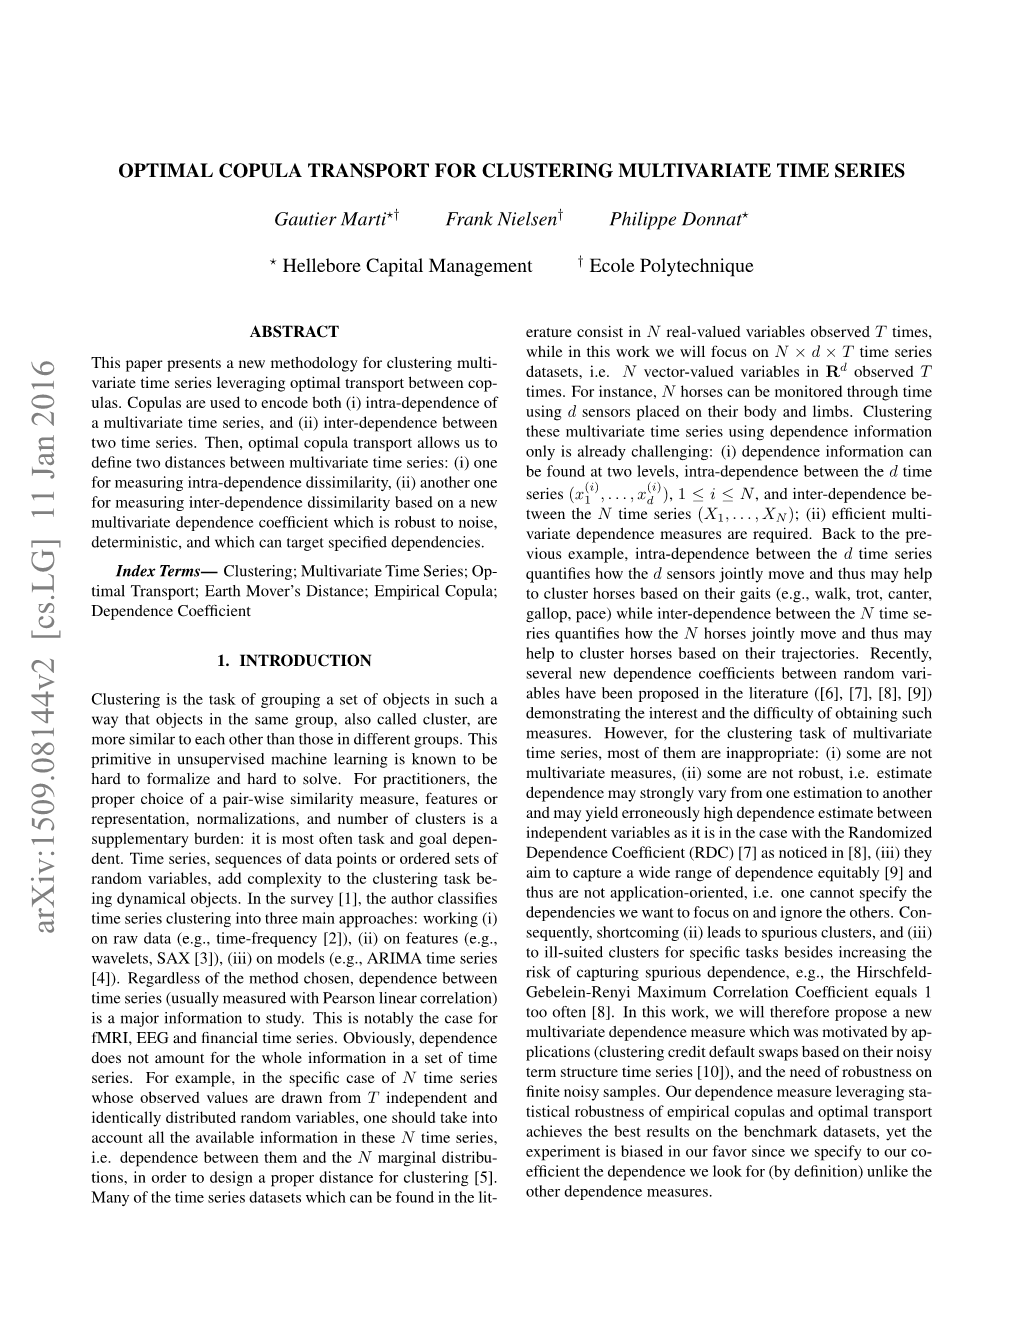 Optimal Copula Transport for Clustering Multivariate Time Series